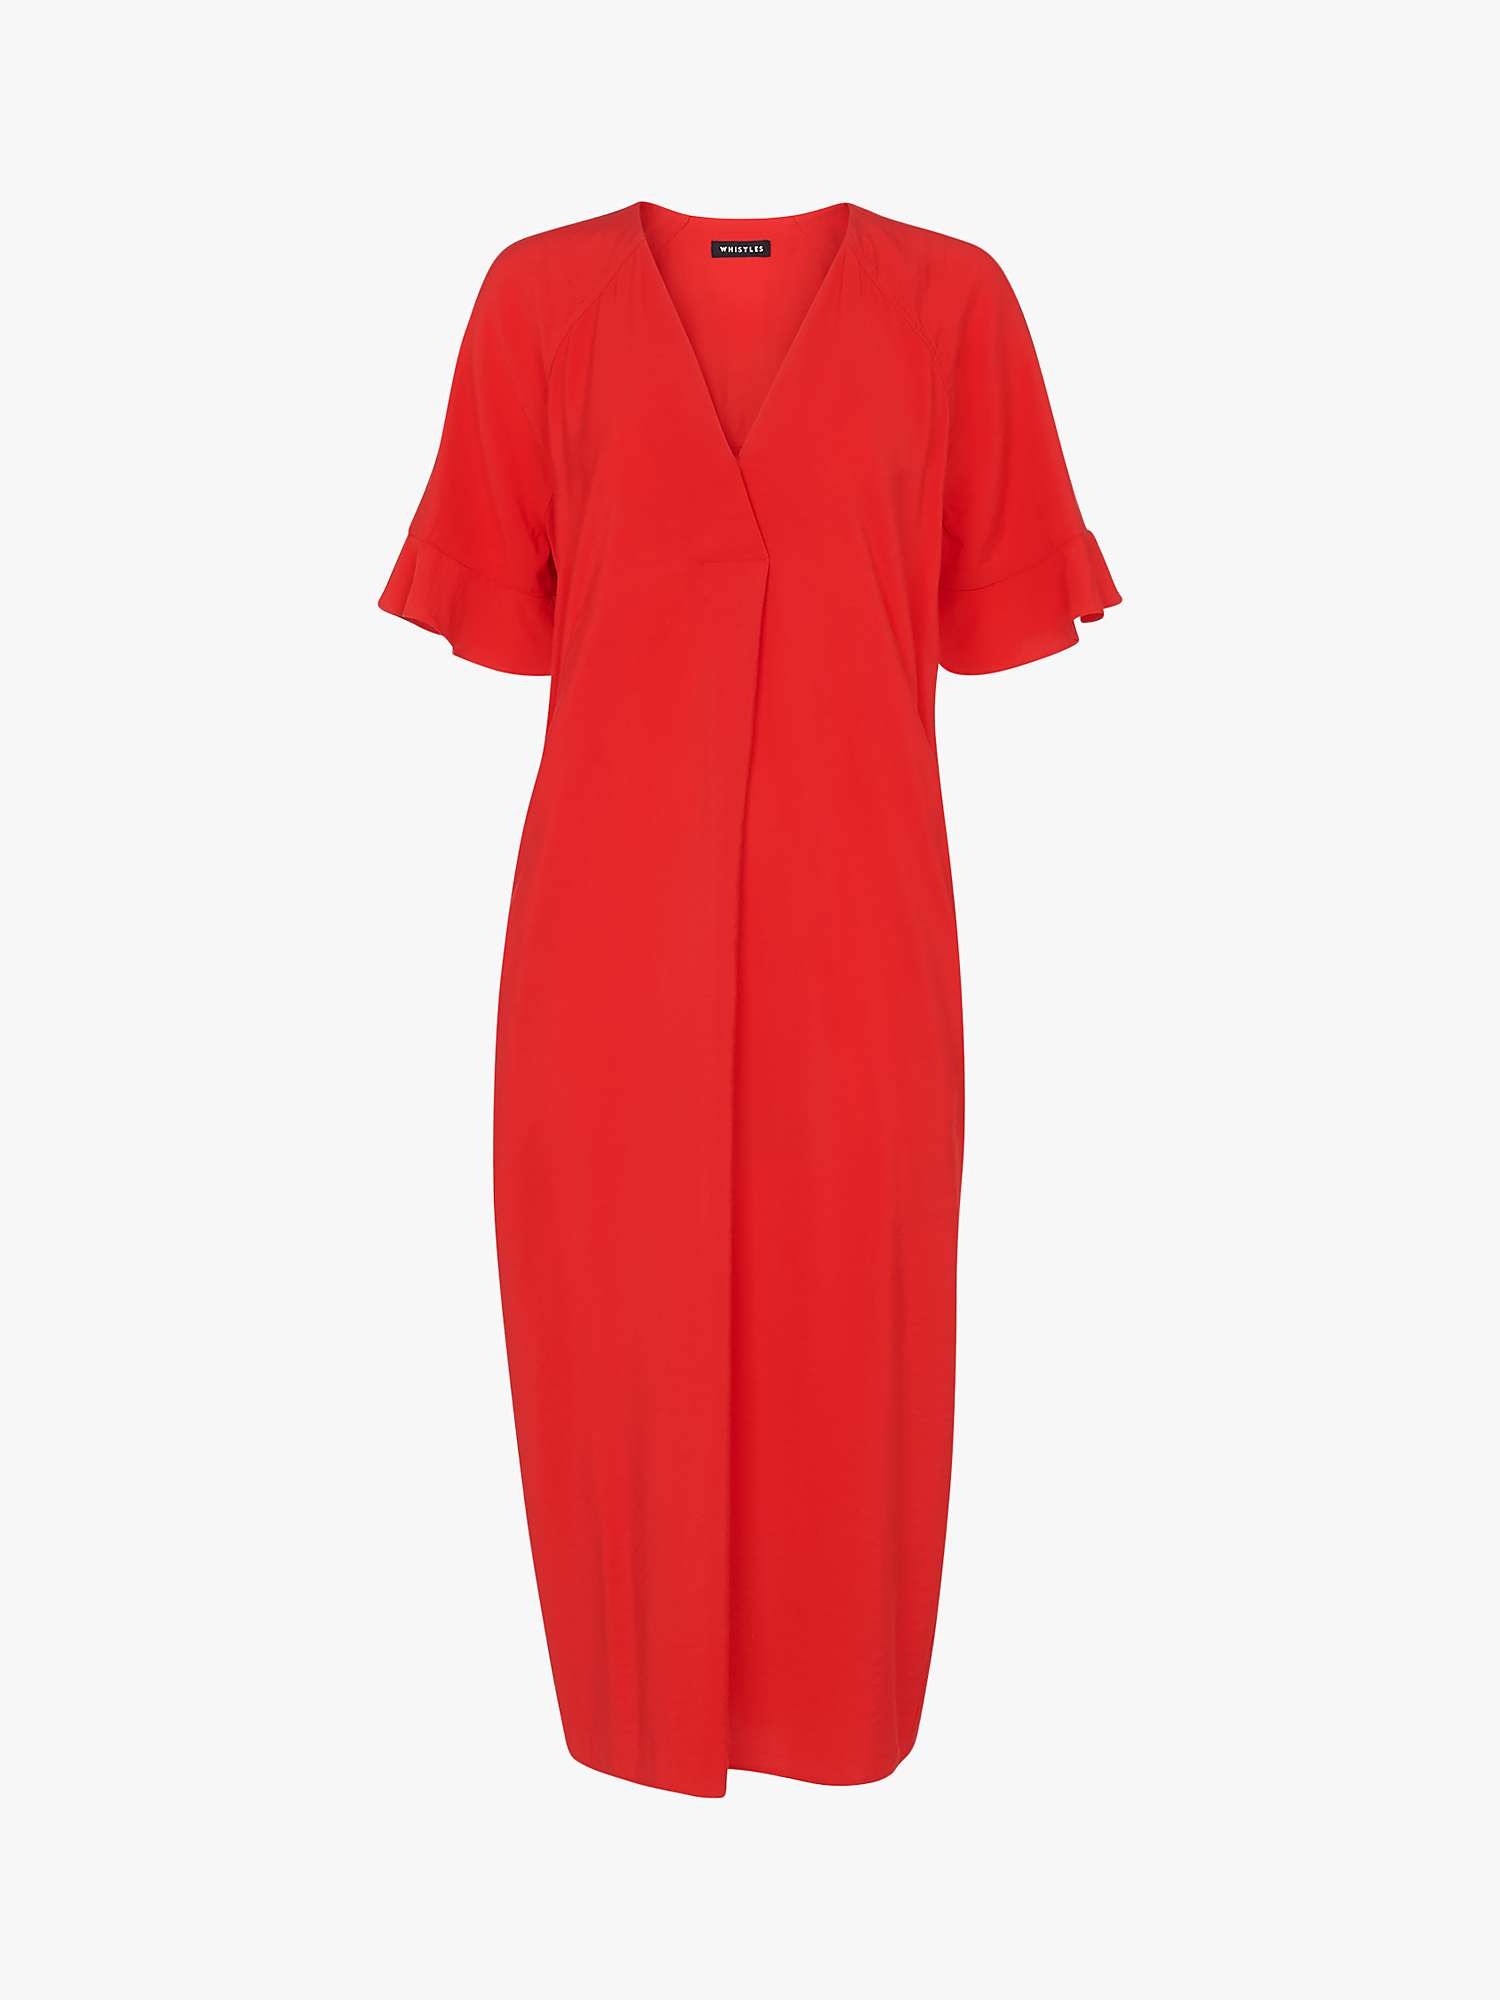 Whistles Alba Midi Dress, Red at John Lewis & Partners